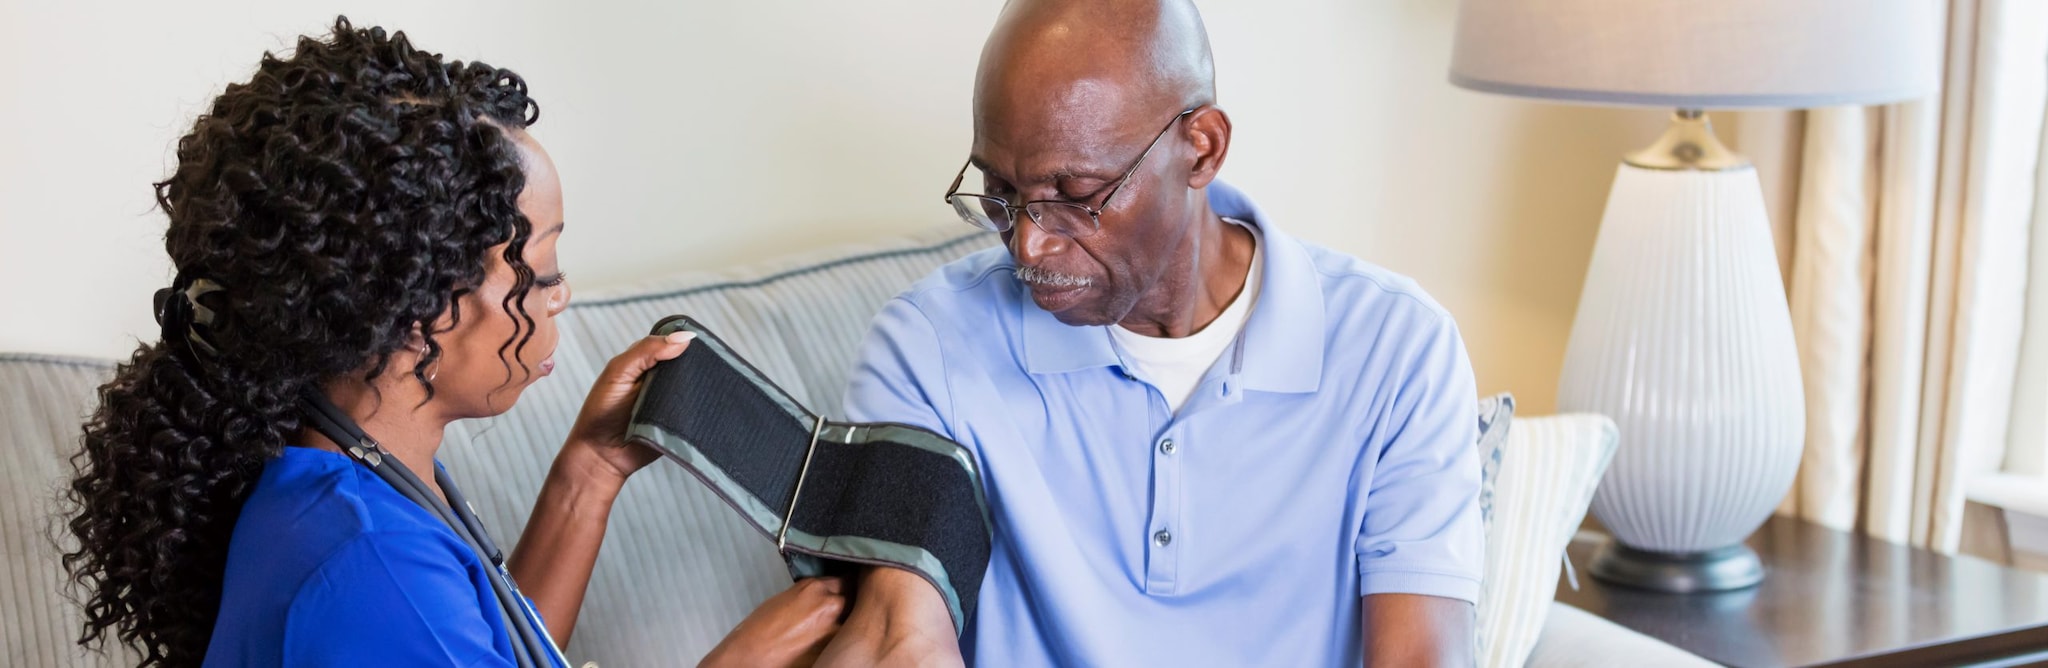 Older man having his blood pressure checked.